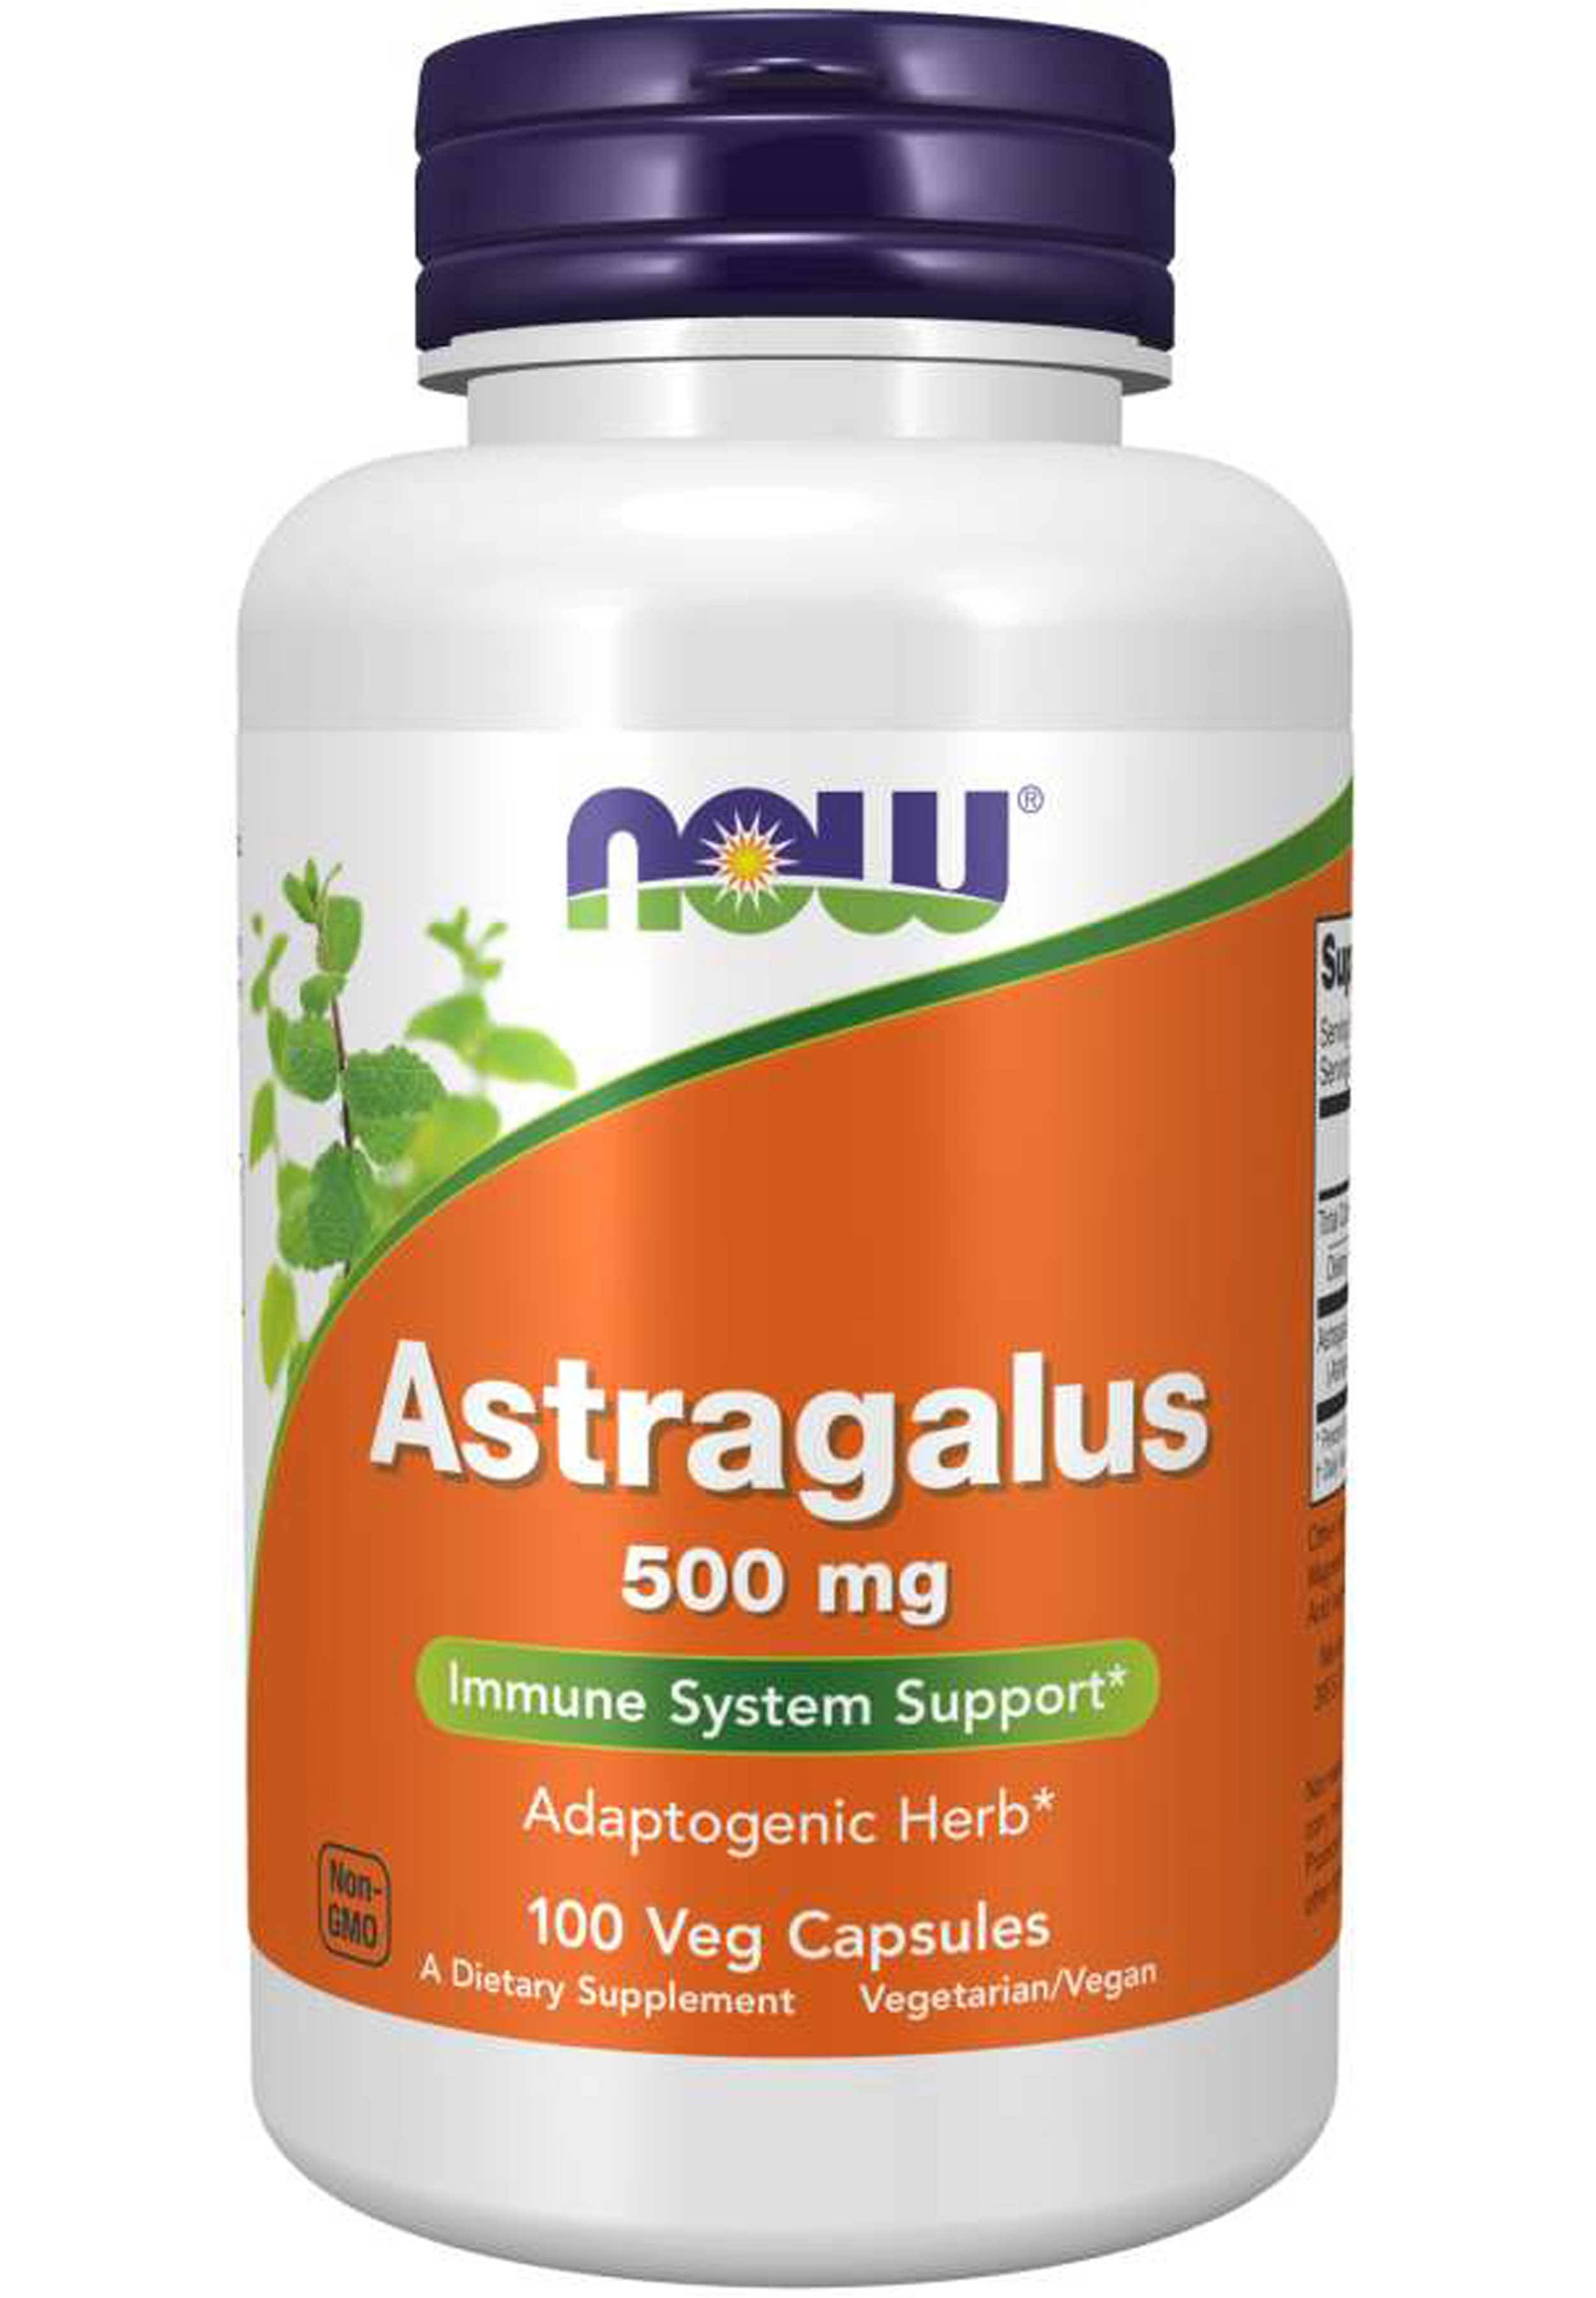 Now Foods Astragalus Supplement - 100 Capsules